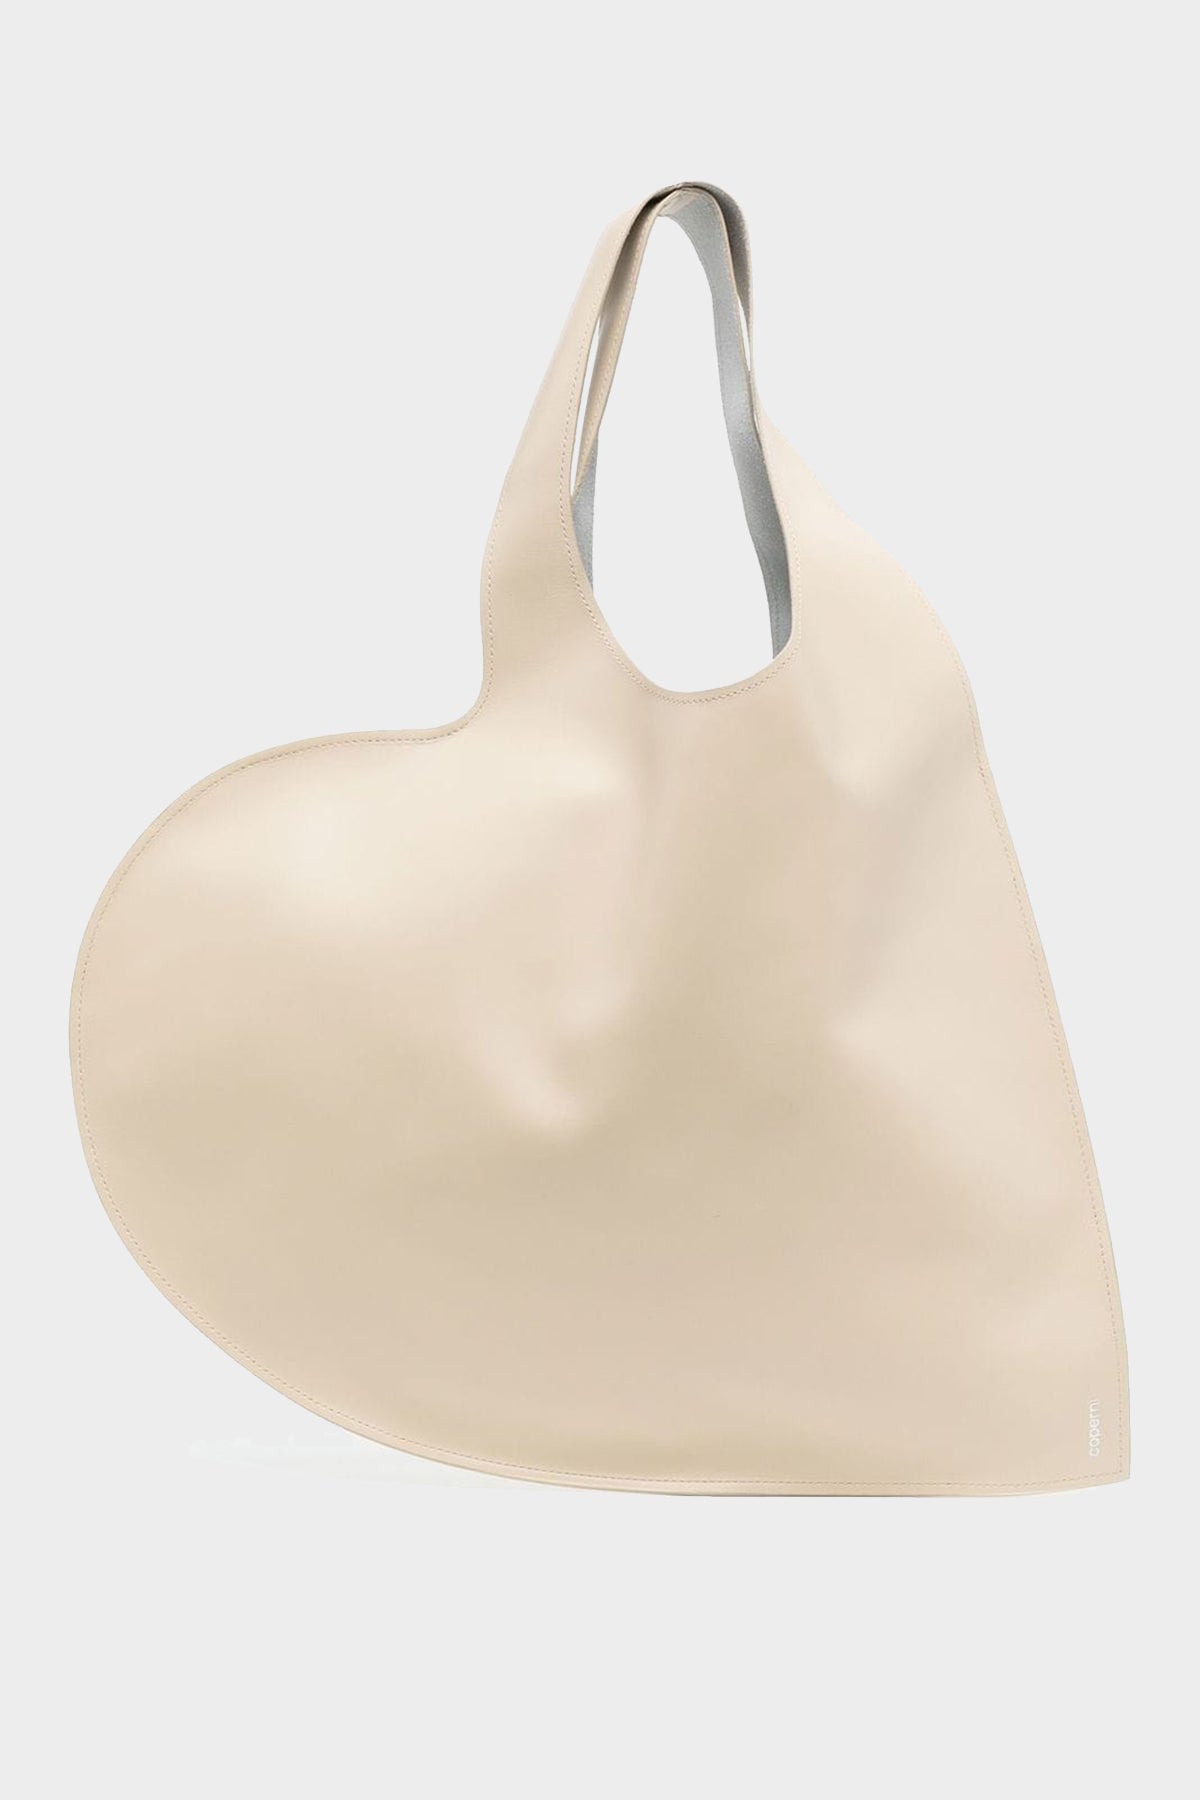 Heart Tote Bag in Sand - shop-olivia.com